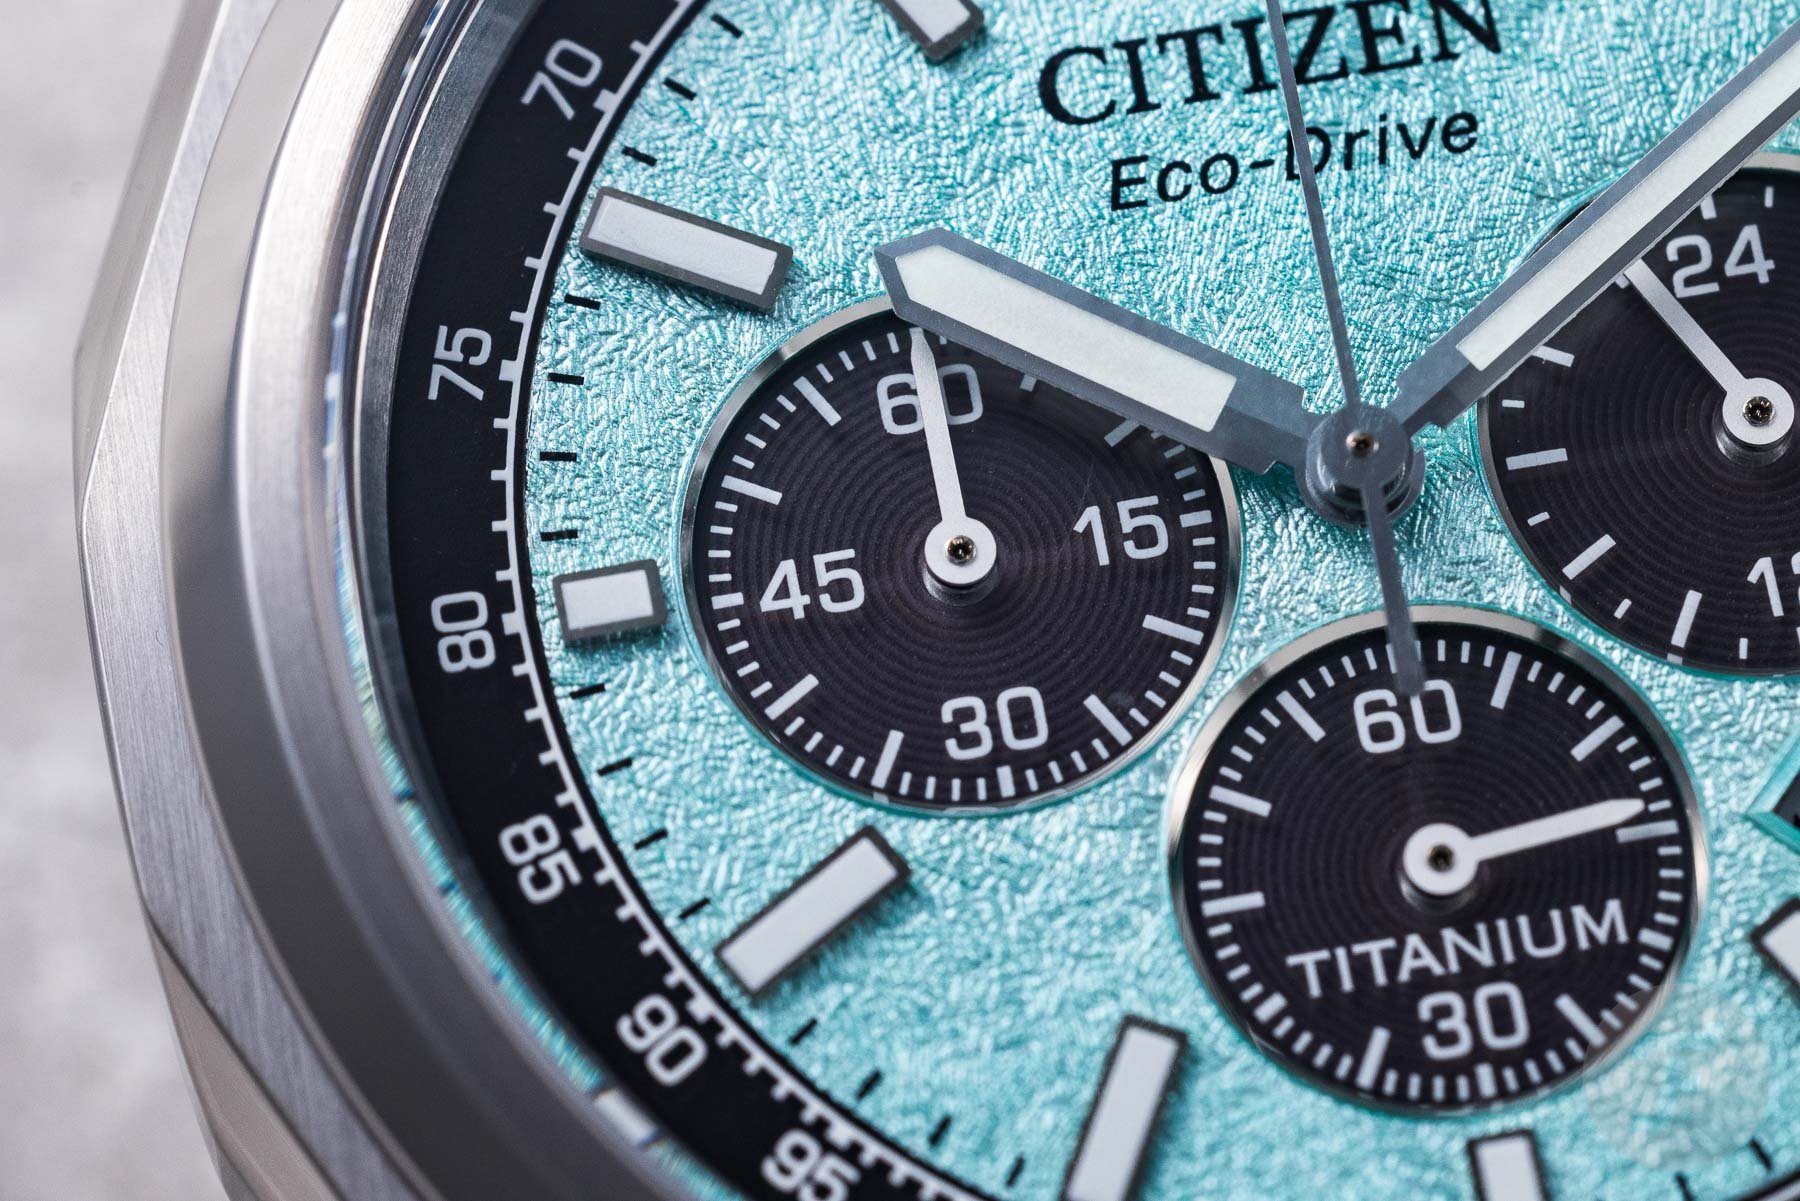 Citizen Super Titanium Eco-Drive Chrono green turquoise dial close-up